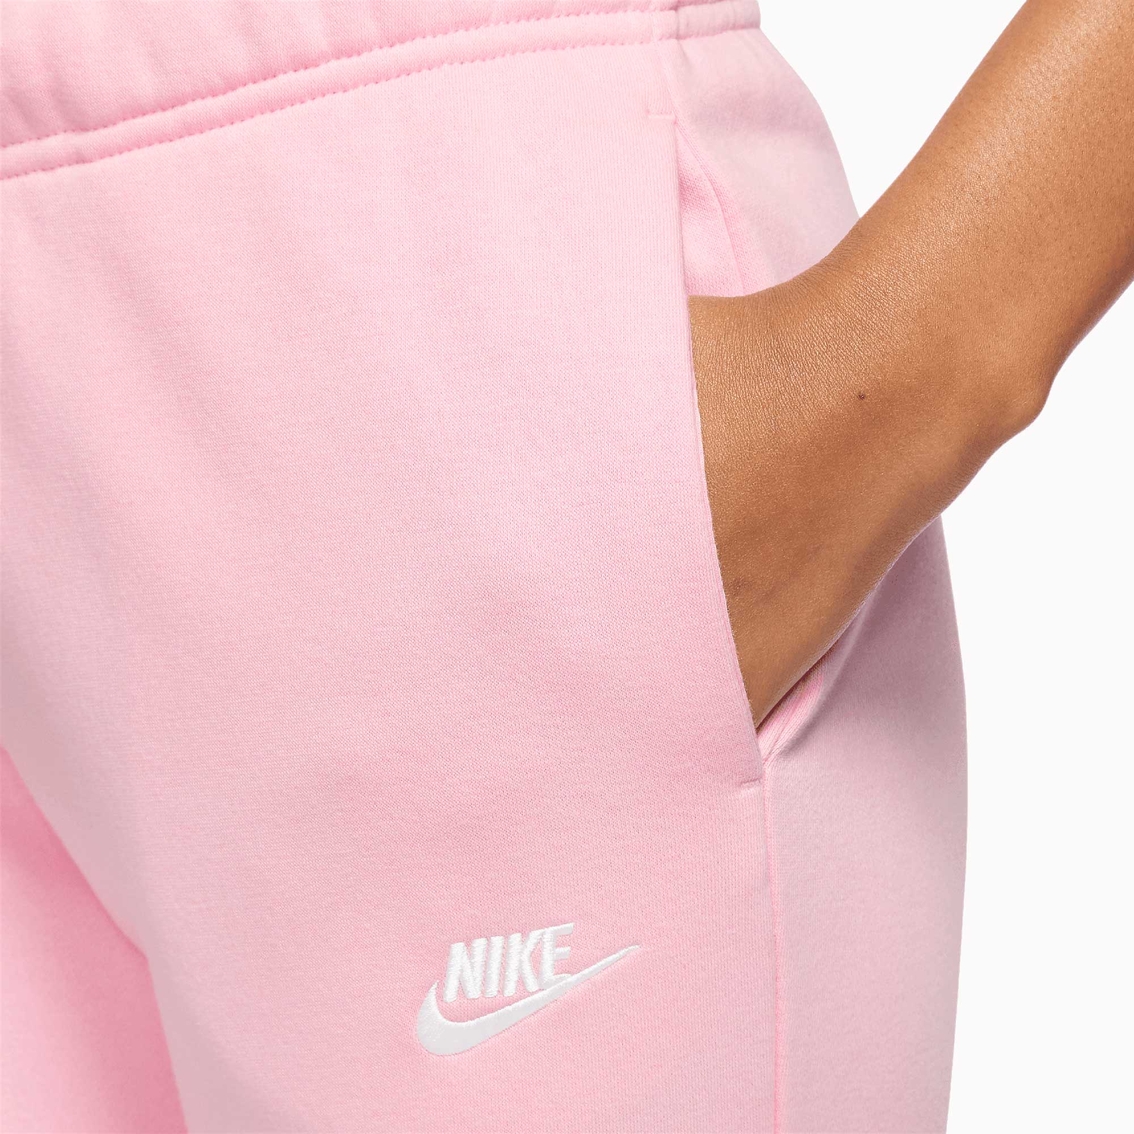 Nike Sportswear Club Fleece Mid Rise Pants | Pants | Clothing ...